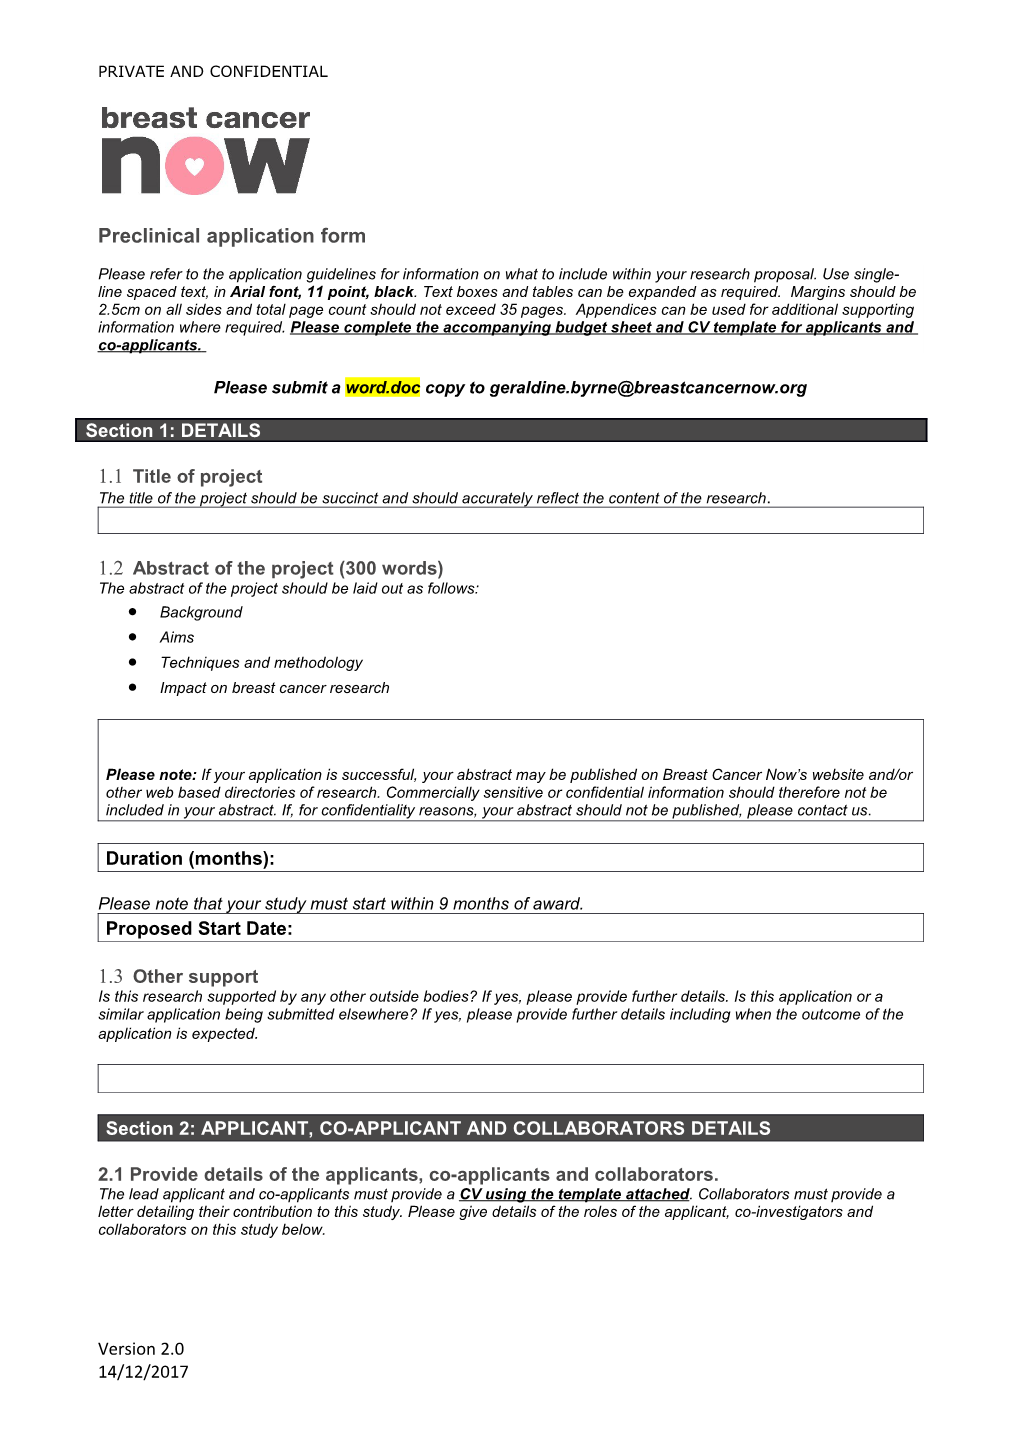 Preclinical Application Form